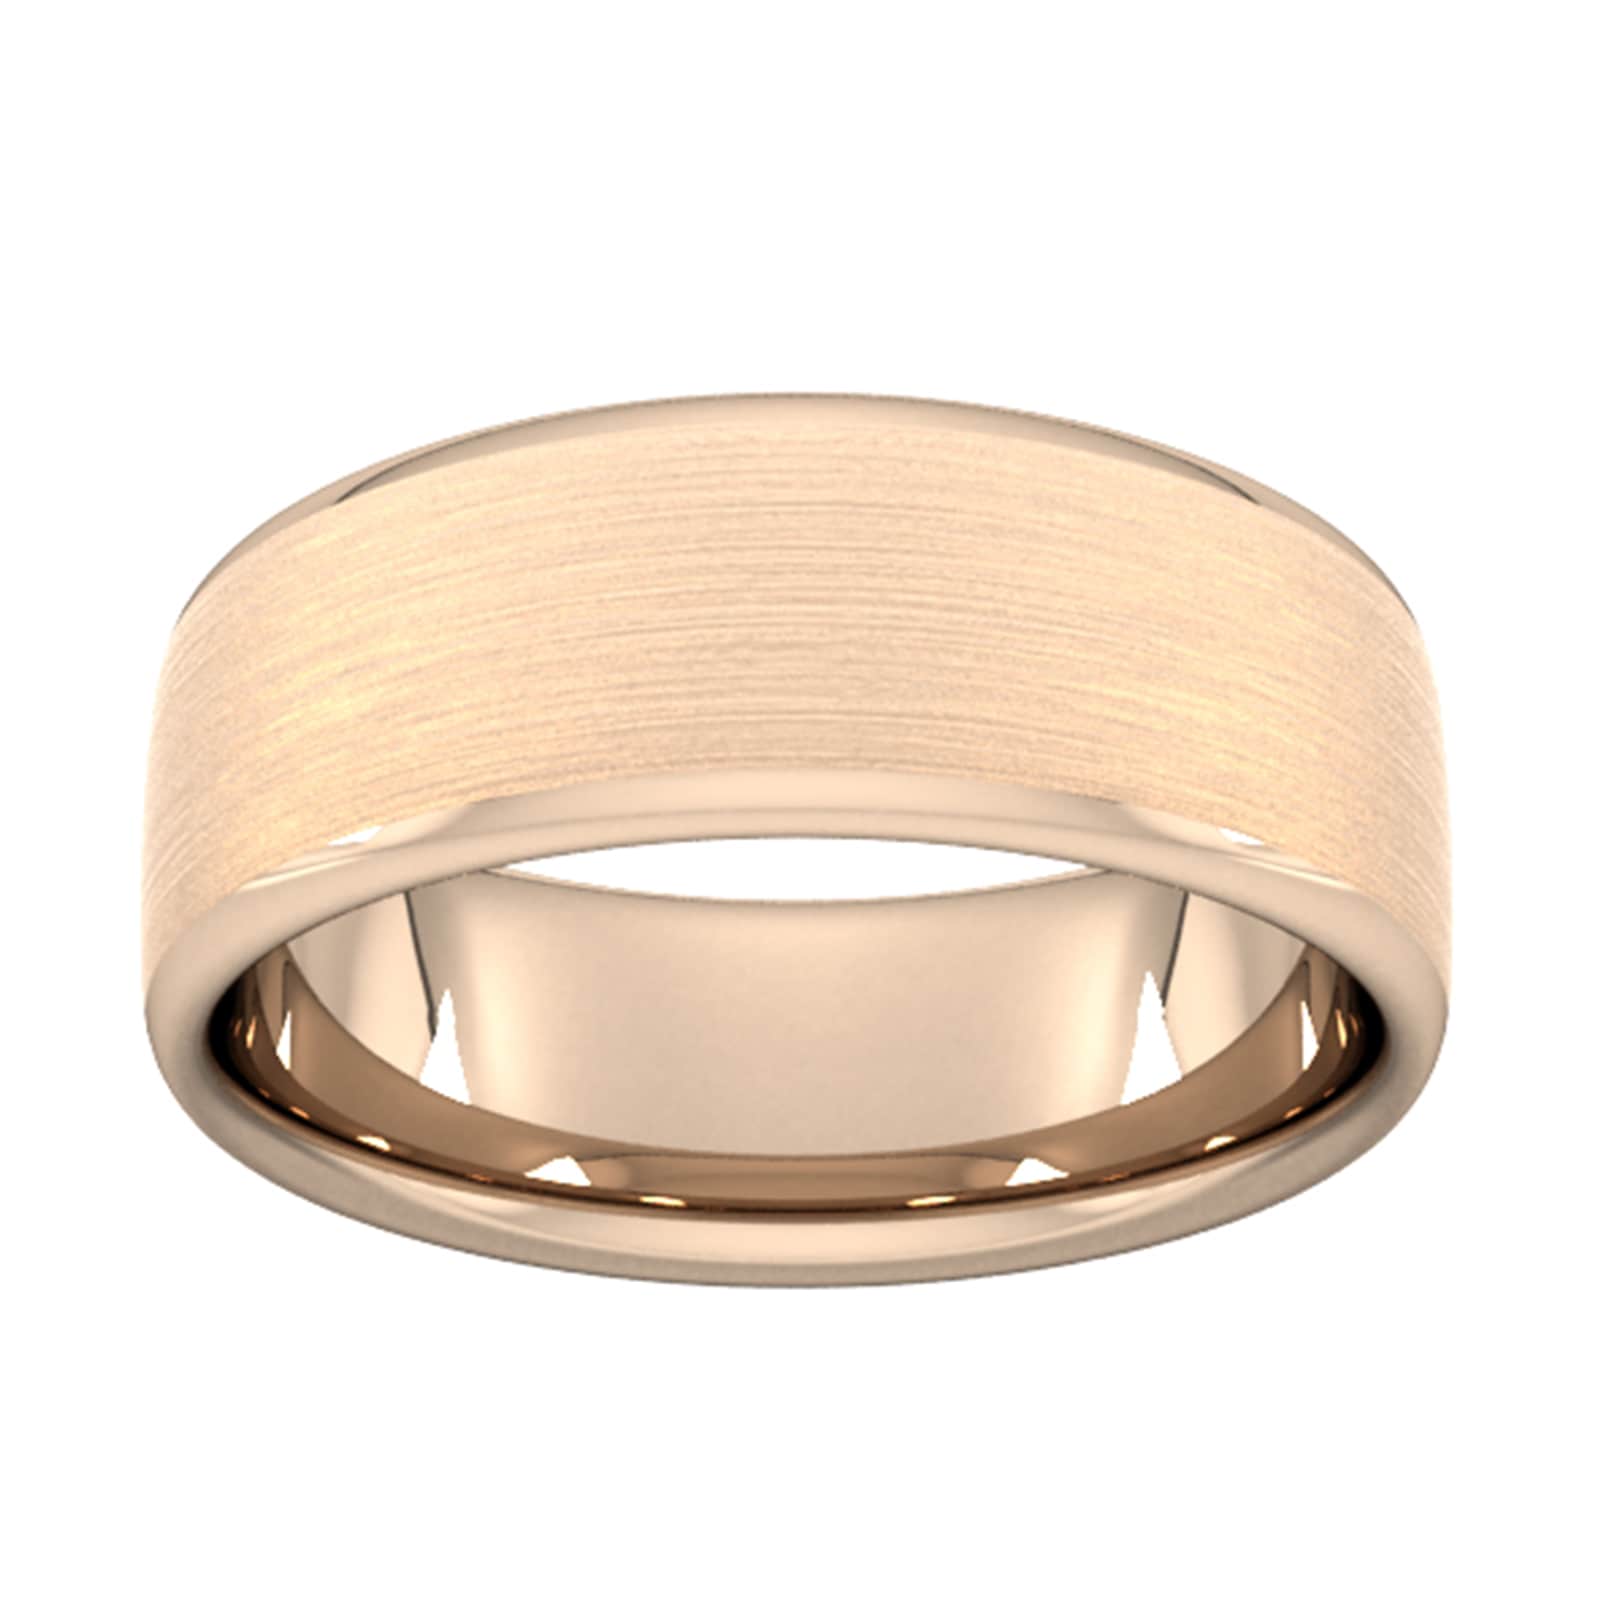 8mm Slight Court Standard Matt Finished Wedding Ring In 9 Carat Rose Gold - Ring Size Z